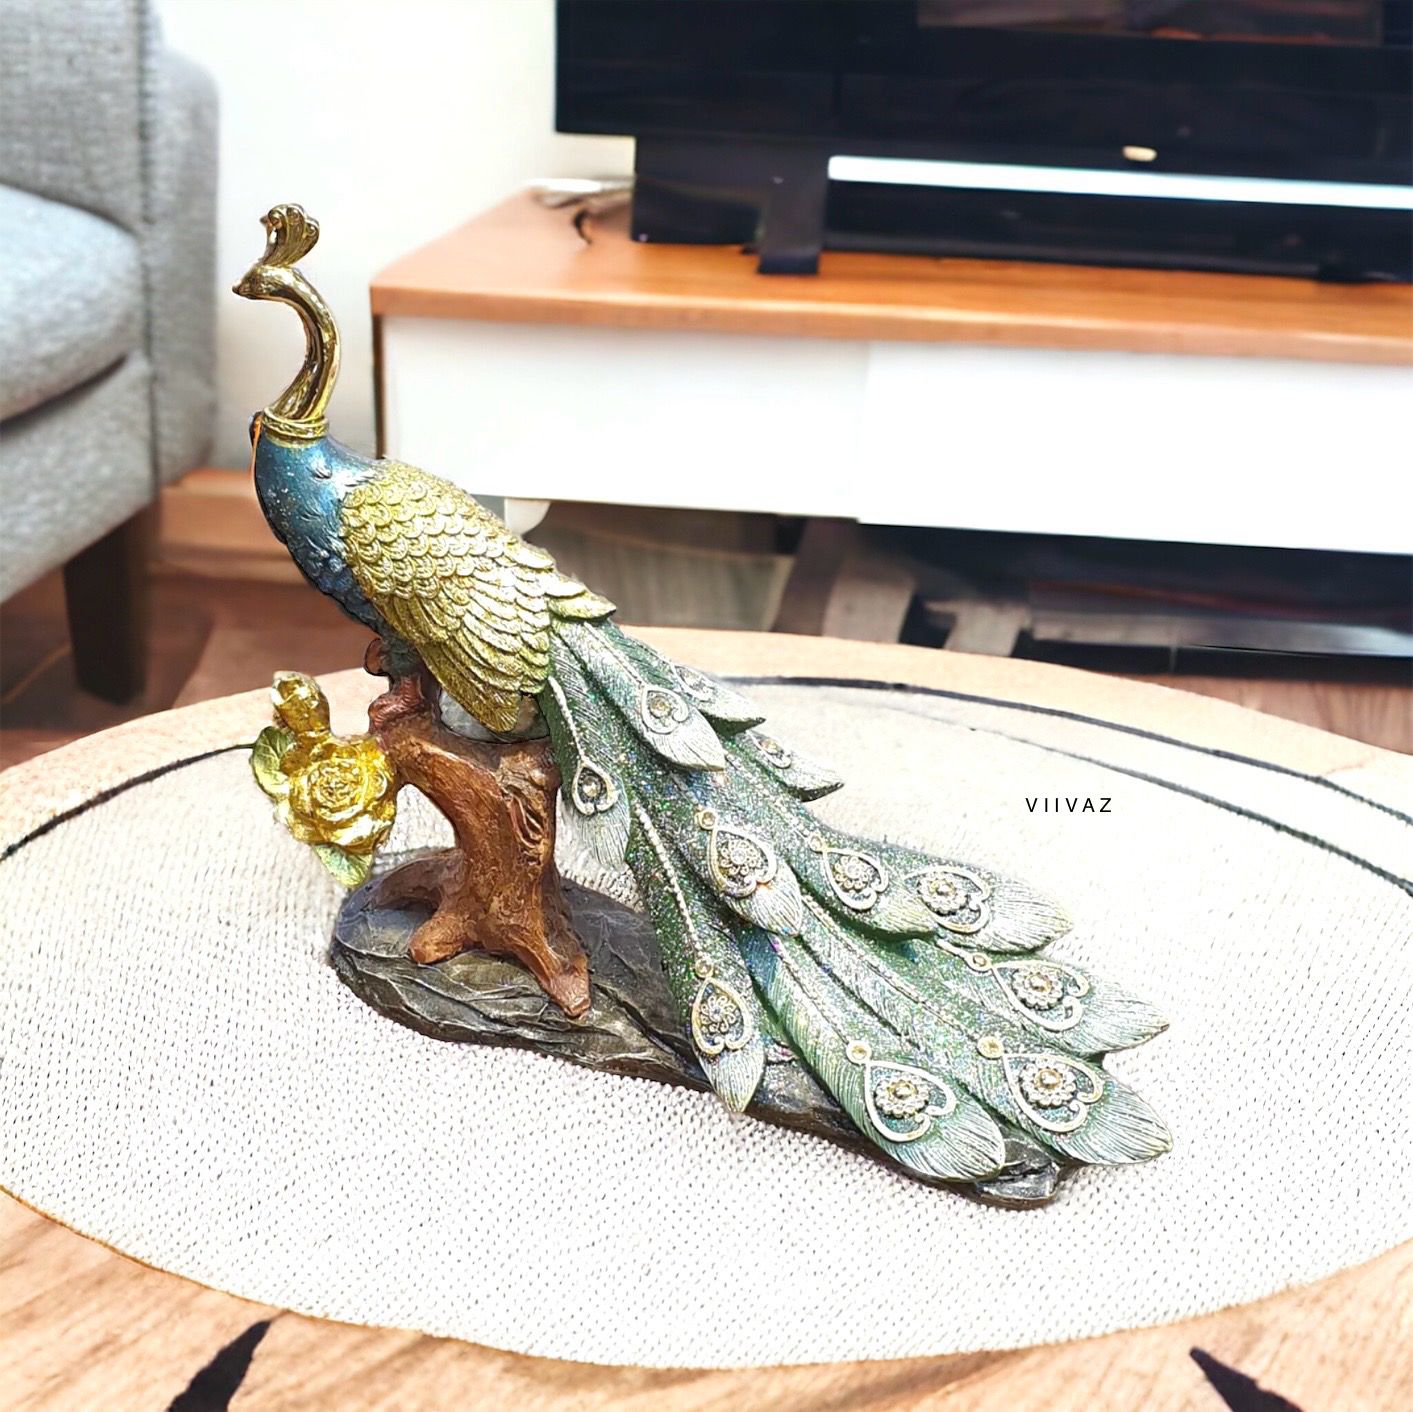 Peacock Paradise